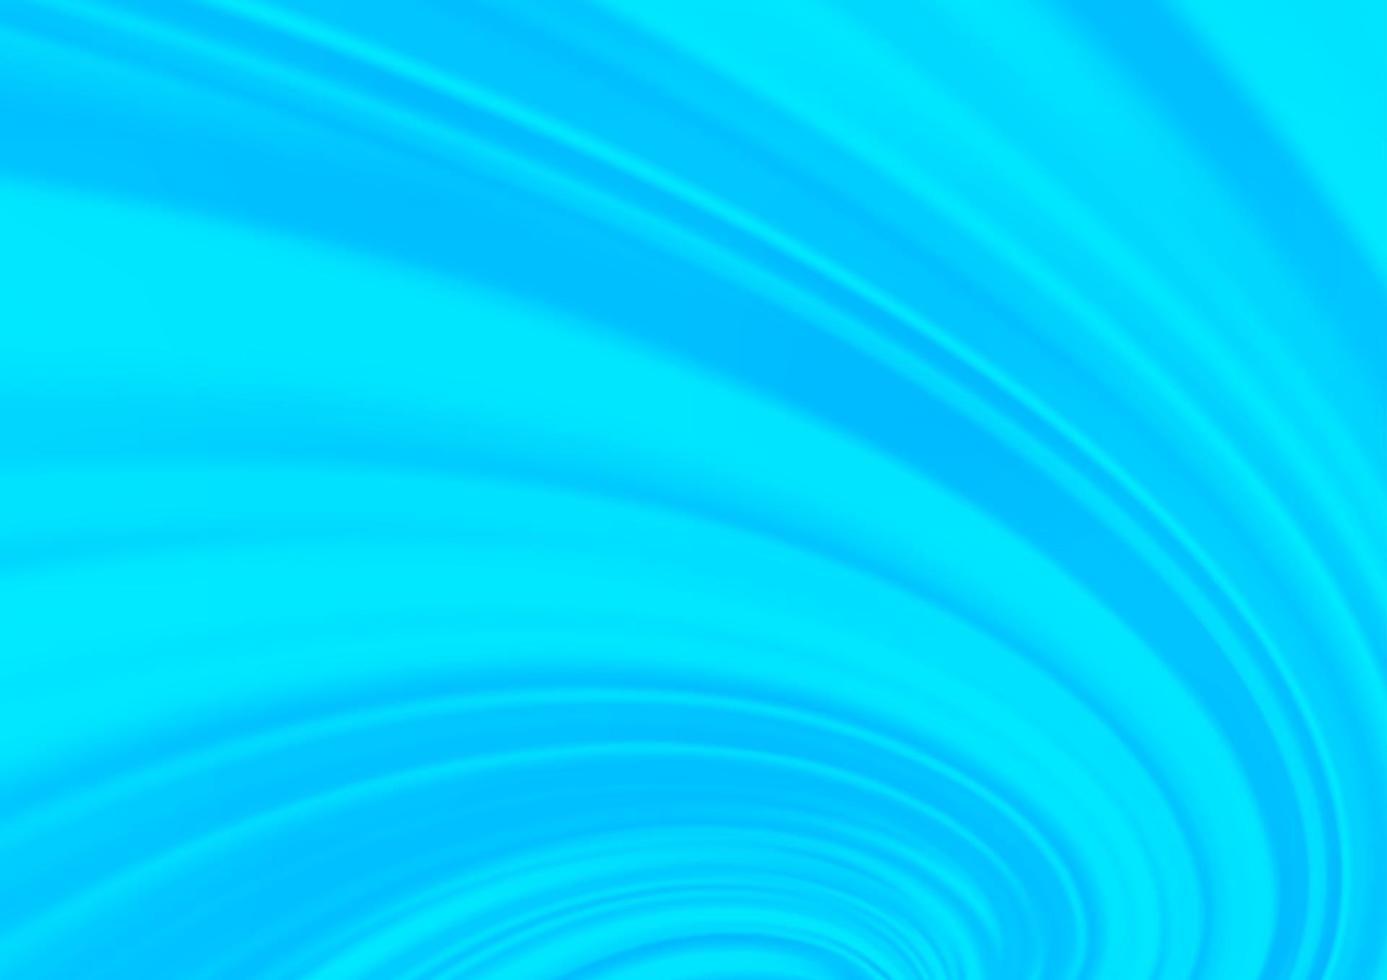 plantilla brillante abstracta de vector azul claro.